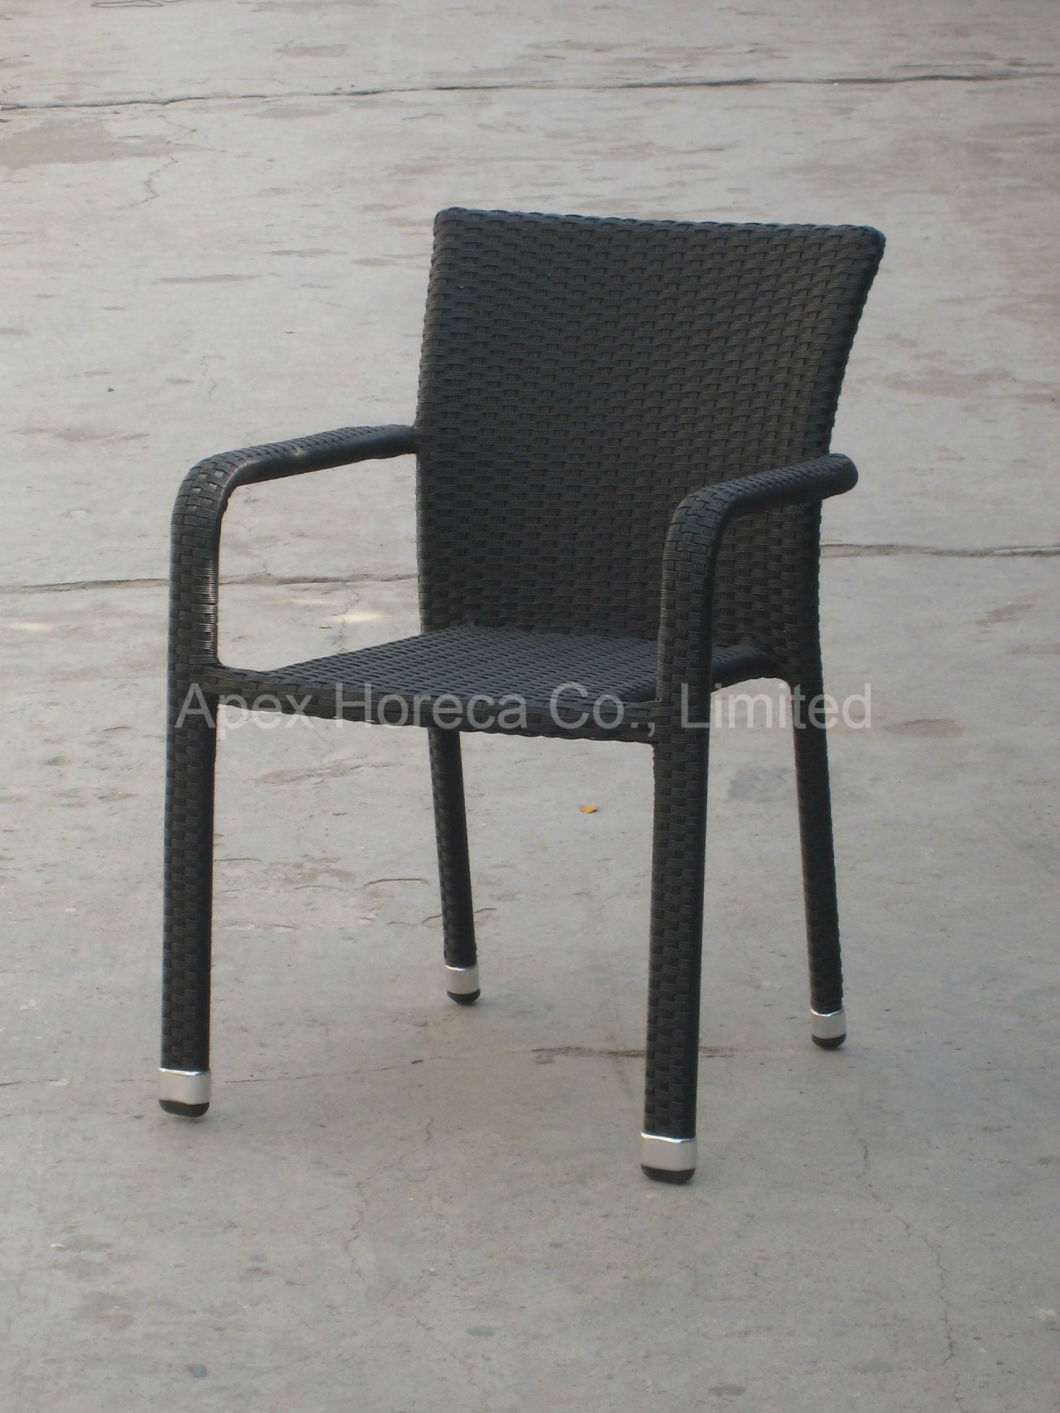 Rattan Dining Chair Outdoor Furniture Garden Furniture Wicker Chair